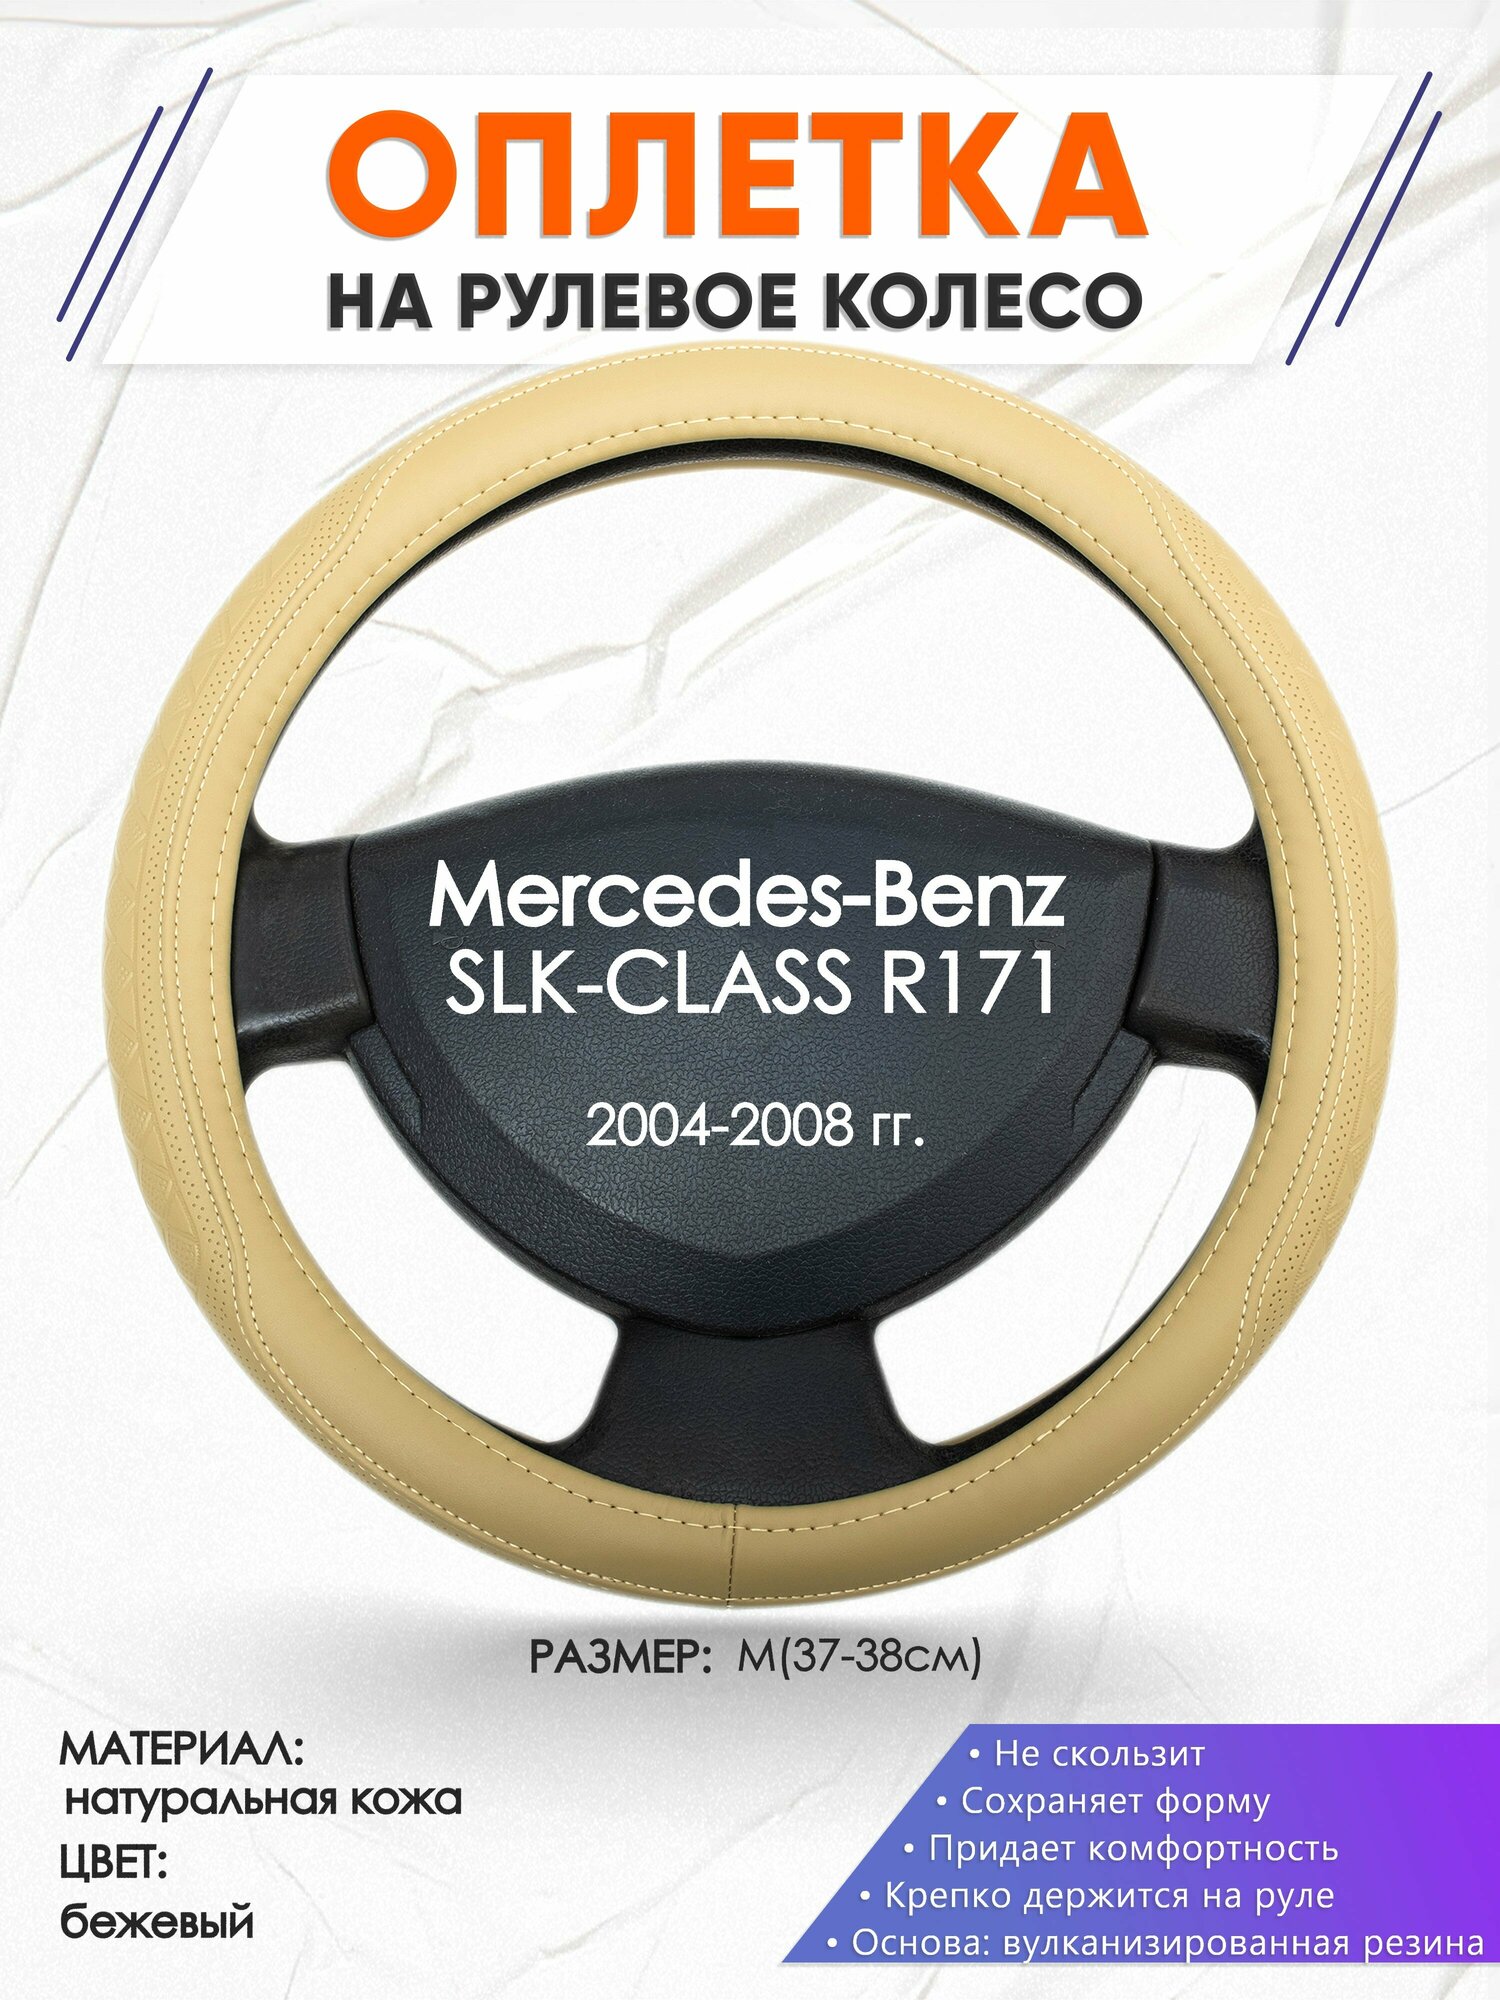 Оплетка наруль для Mercedes-Benz SLK-CLASS R171(Мерседес Бенц ) 2004-2008 годов выпуска, размер M(37-38см), Натуральная кожа 91